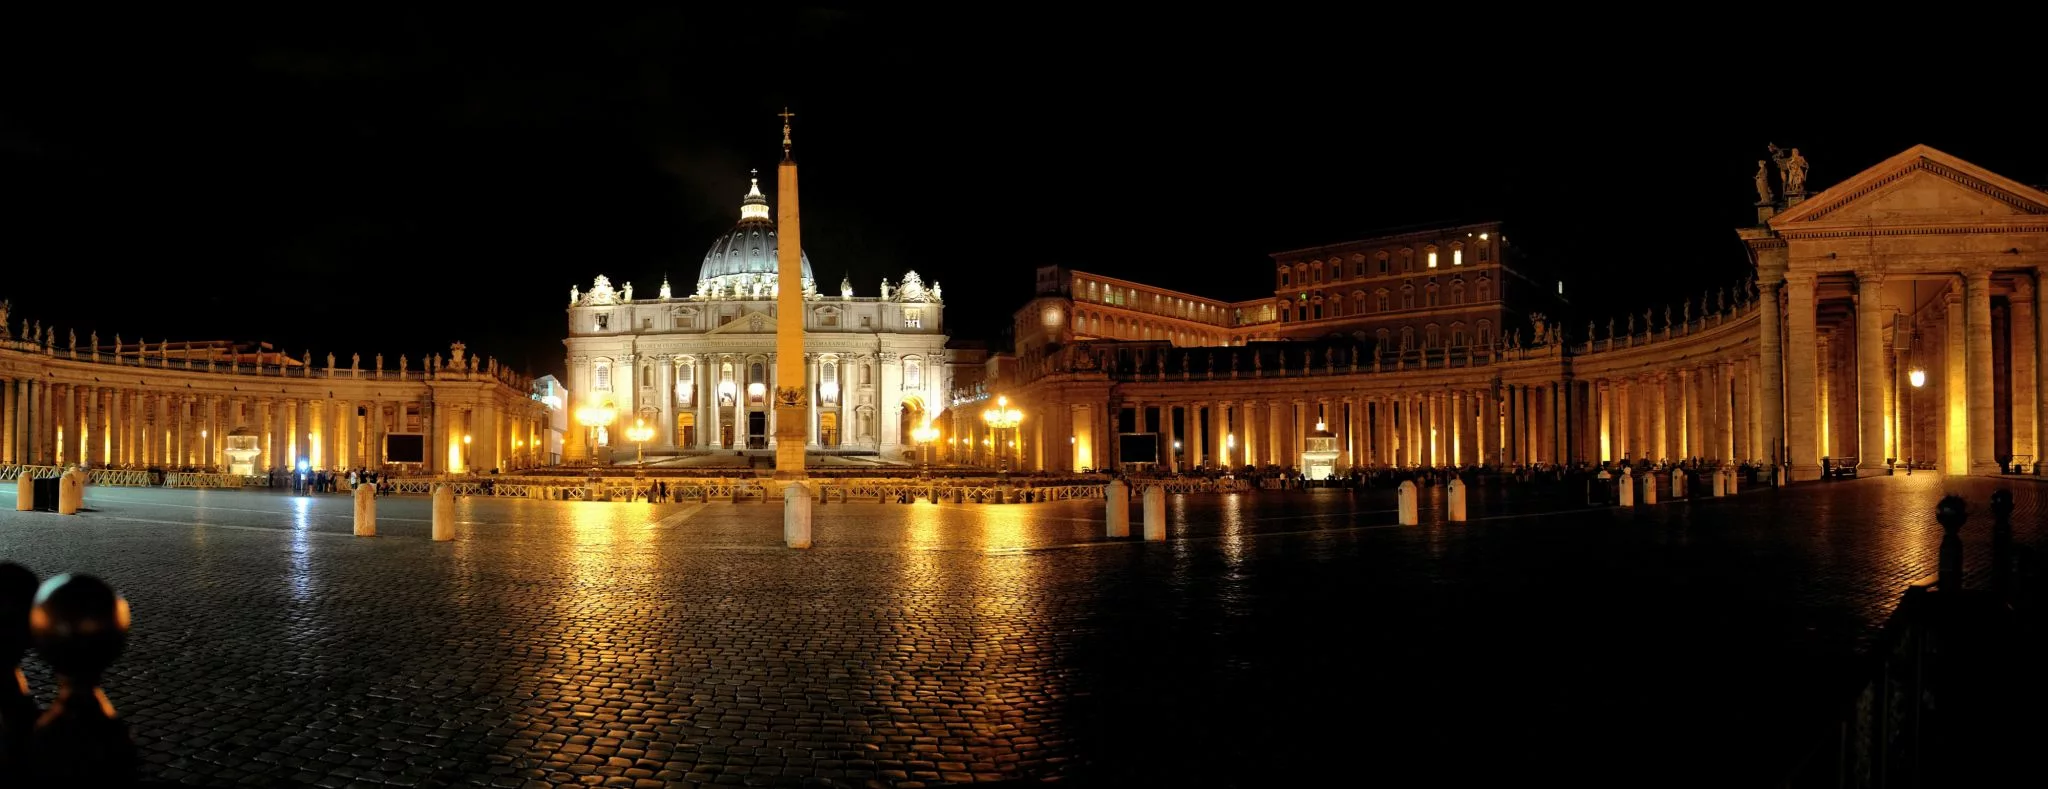 Piazza San Pietro - Vatican, Vatican City State